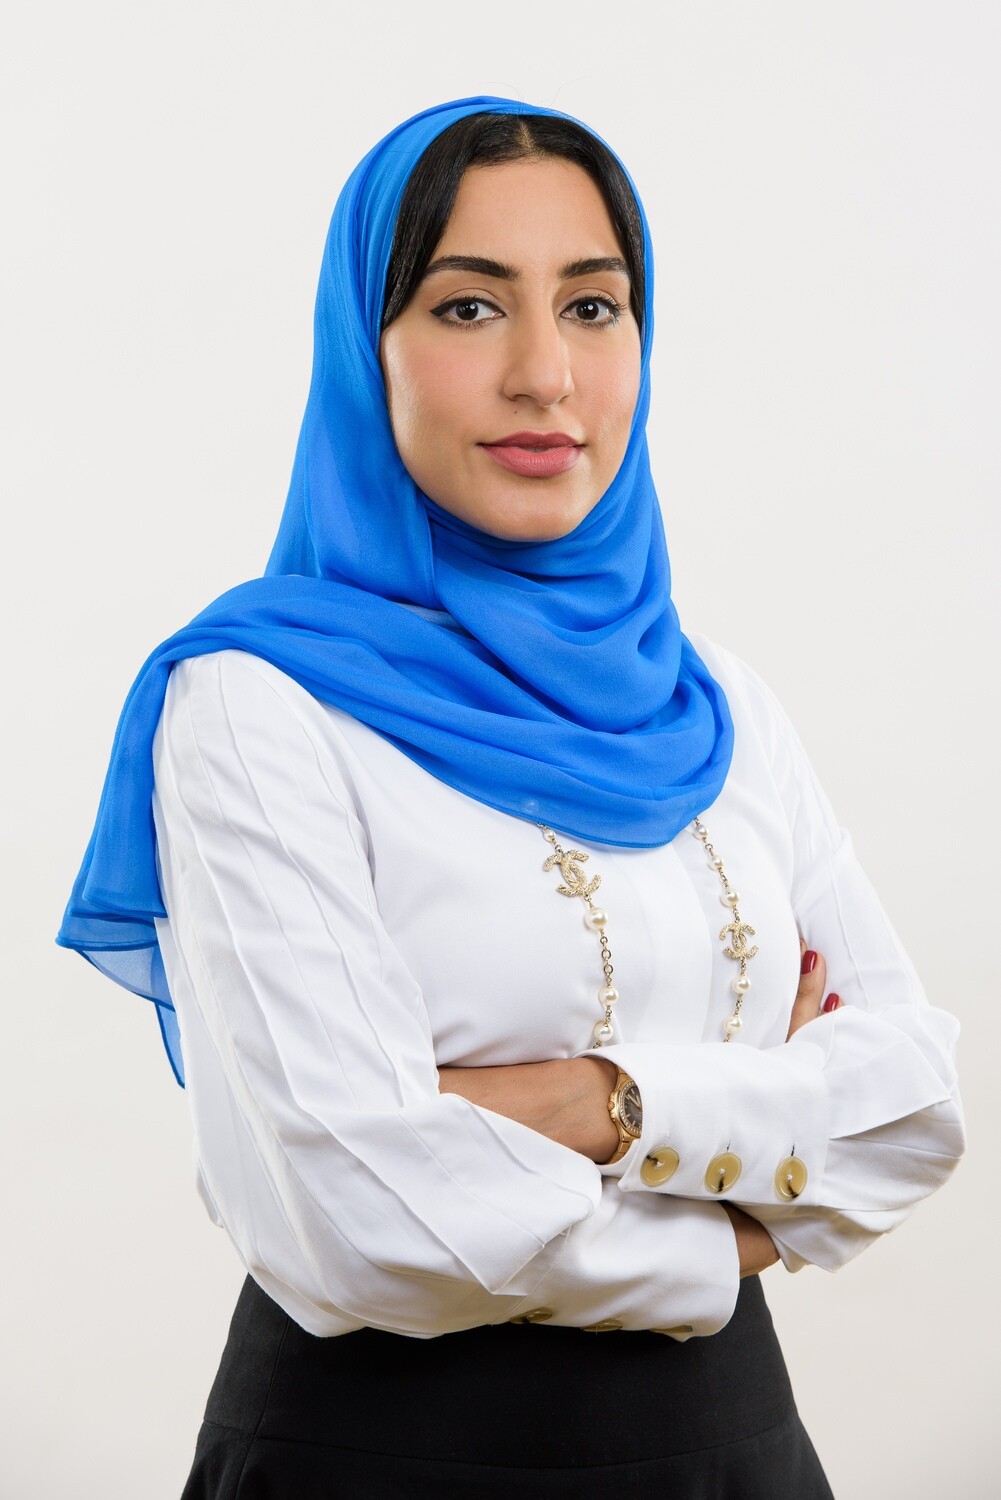 Harthy (Al) Khaula, CEO, Injaz Oman